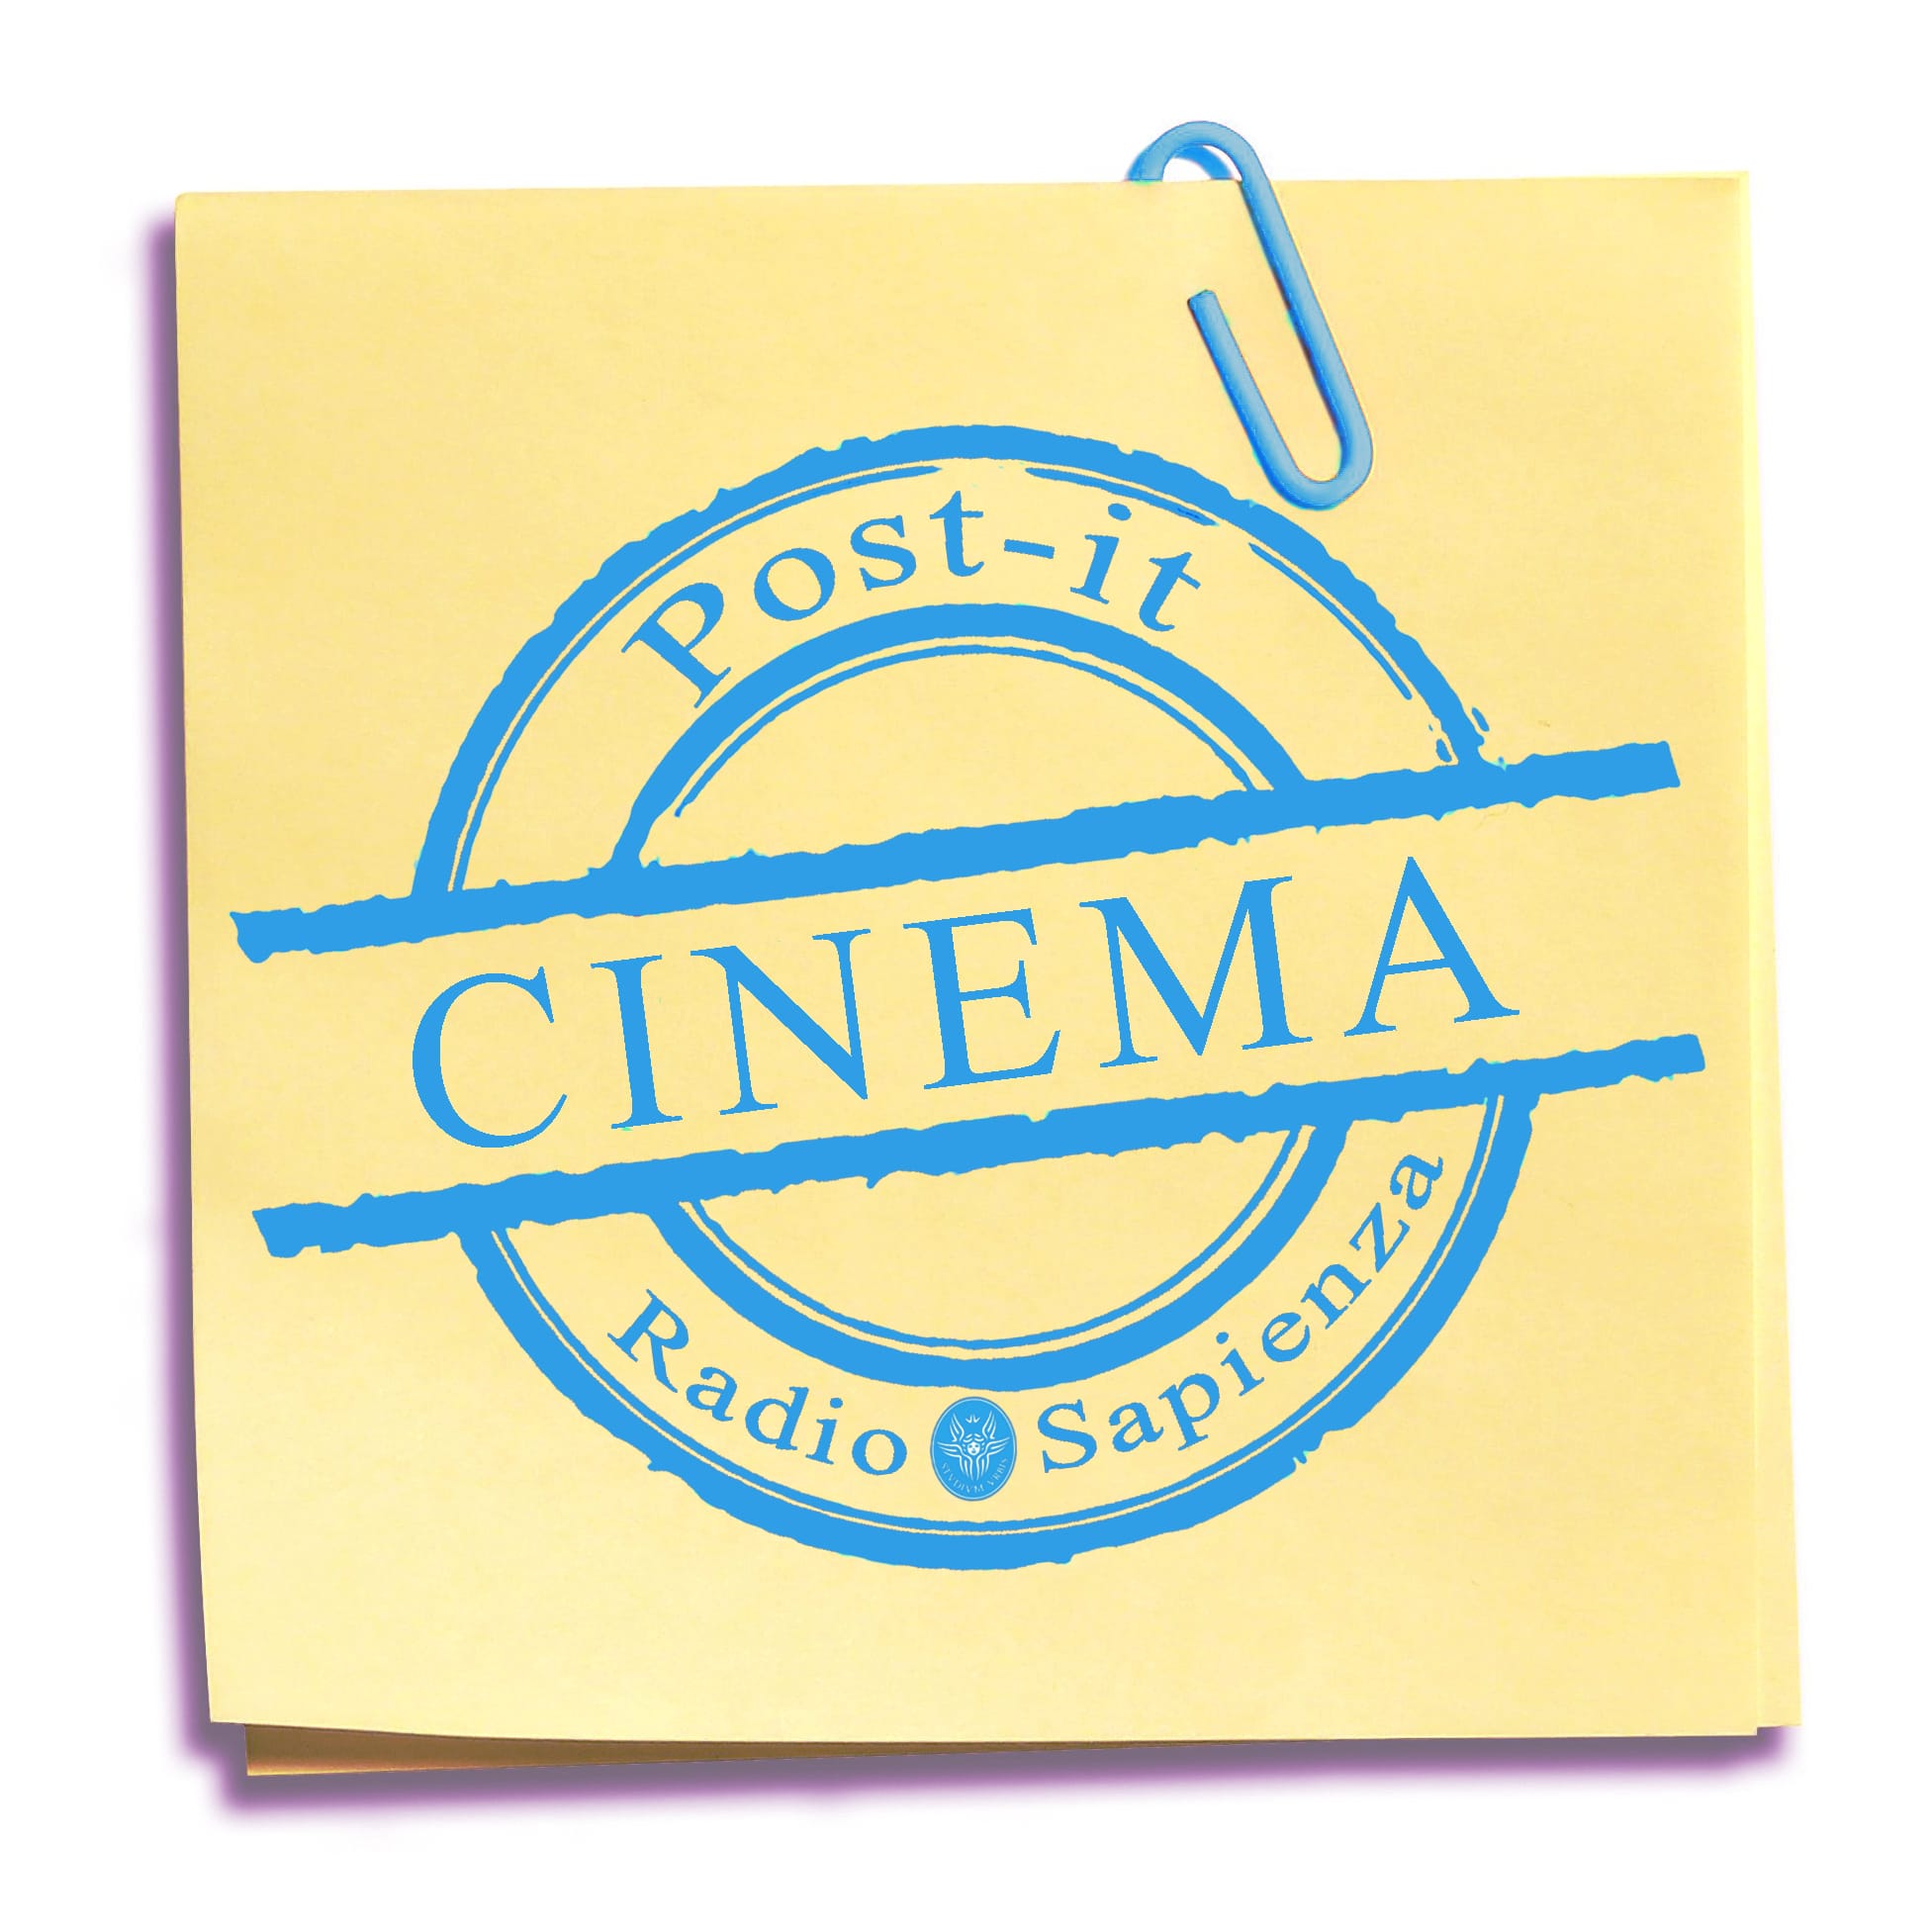 Post-It Cinema – Mercoledì 16 marzo